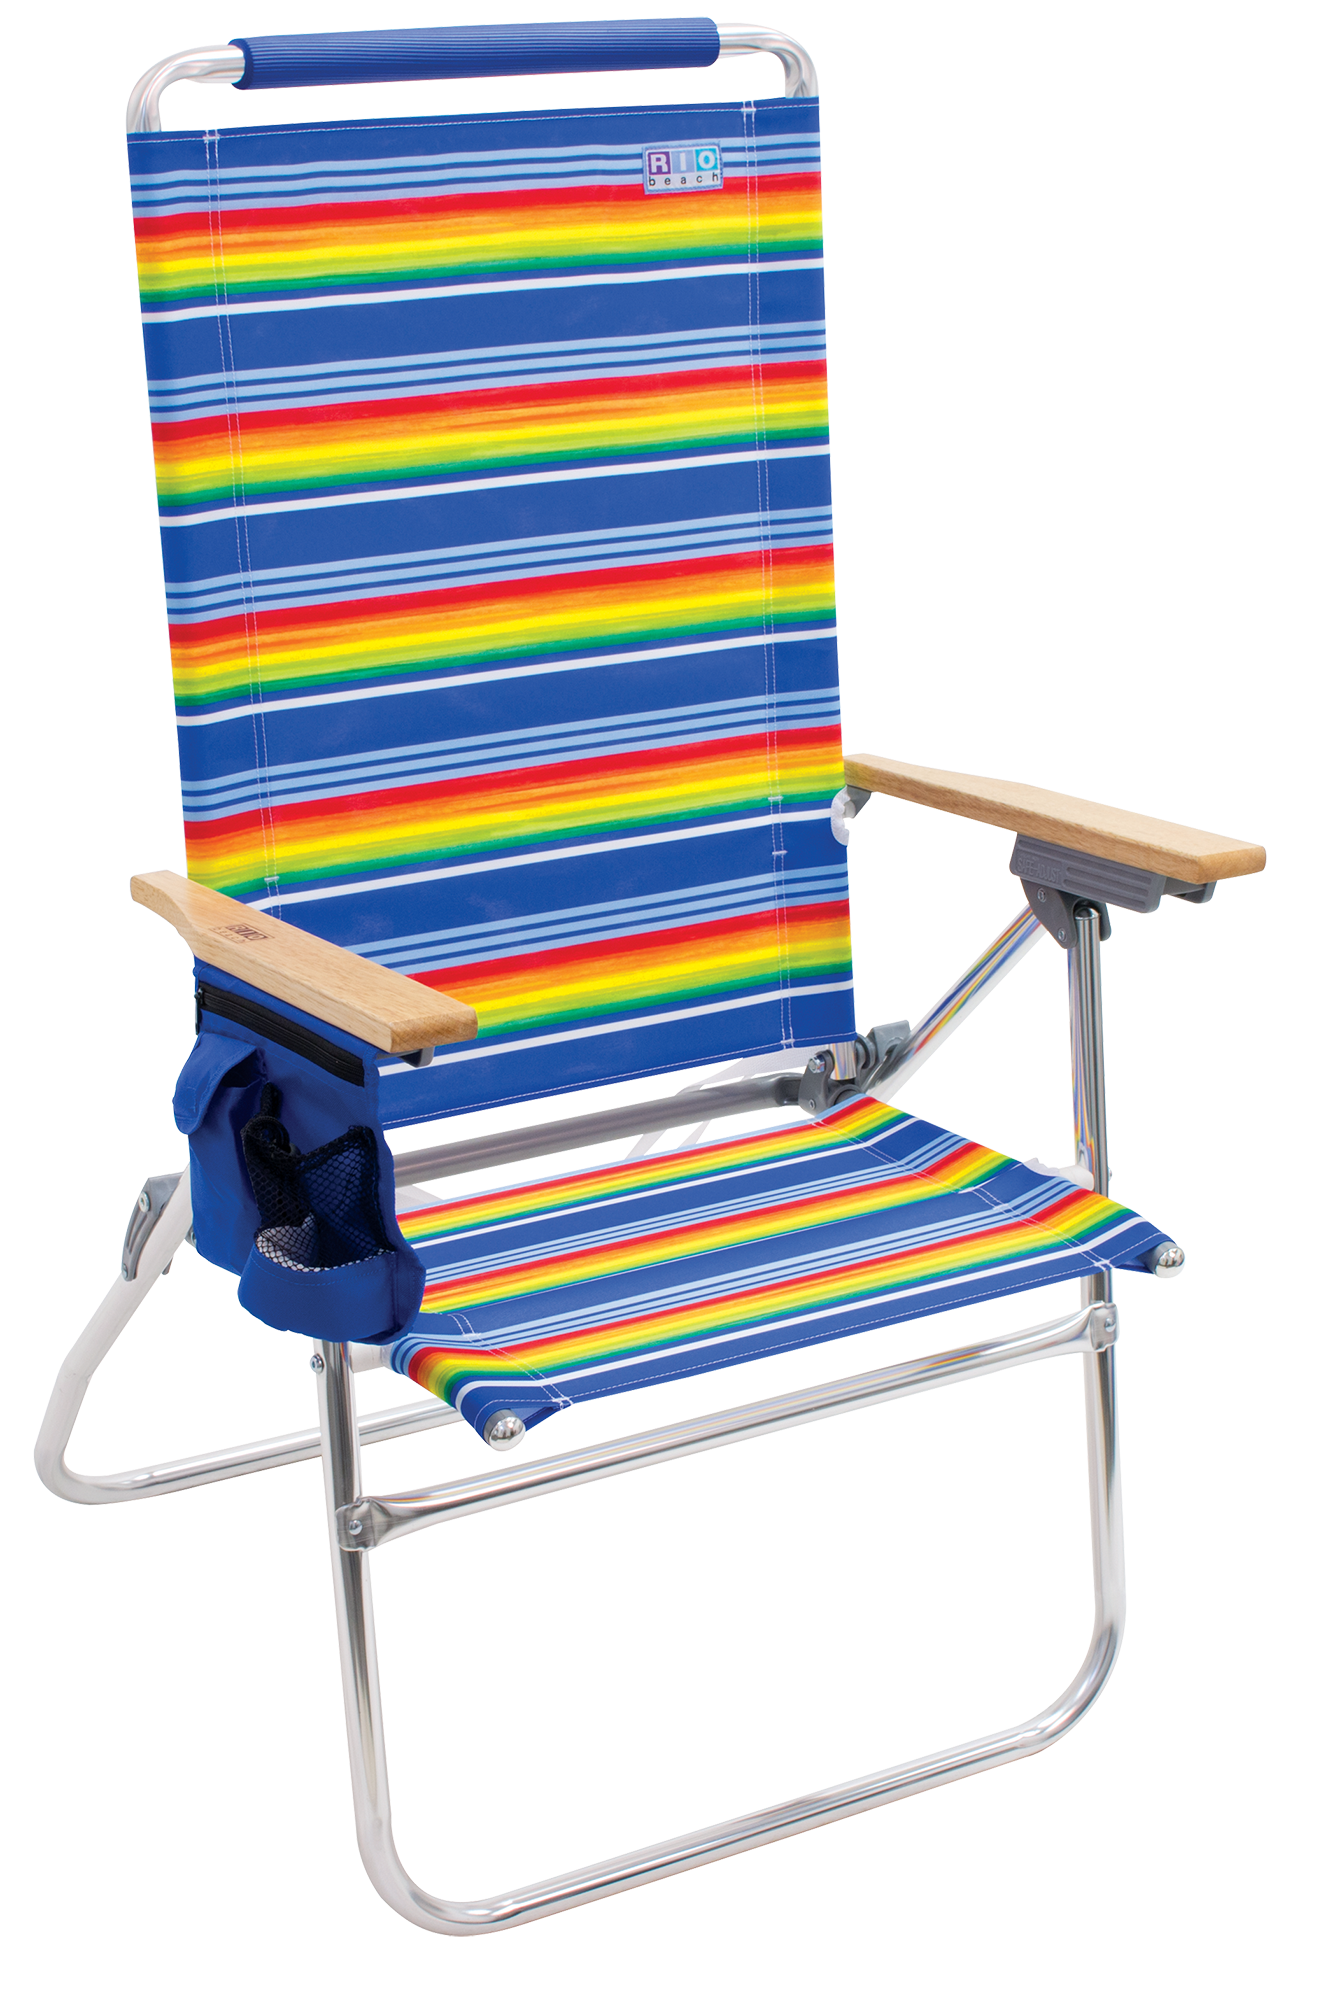 RIO Hi-Boy Lounge Aluminum Beach Chair - Multi-color - image 1 of 11